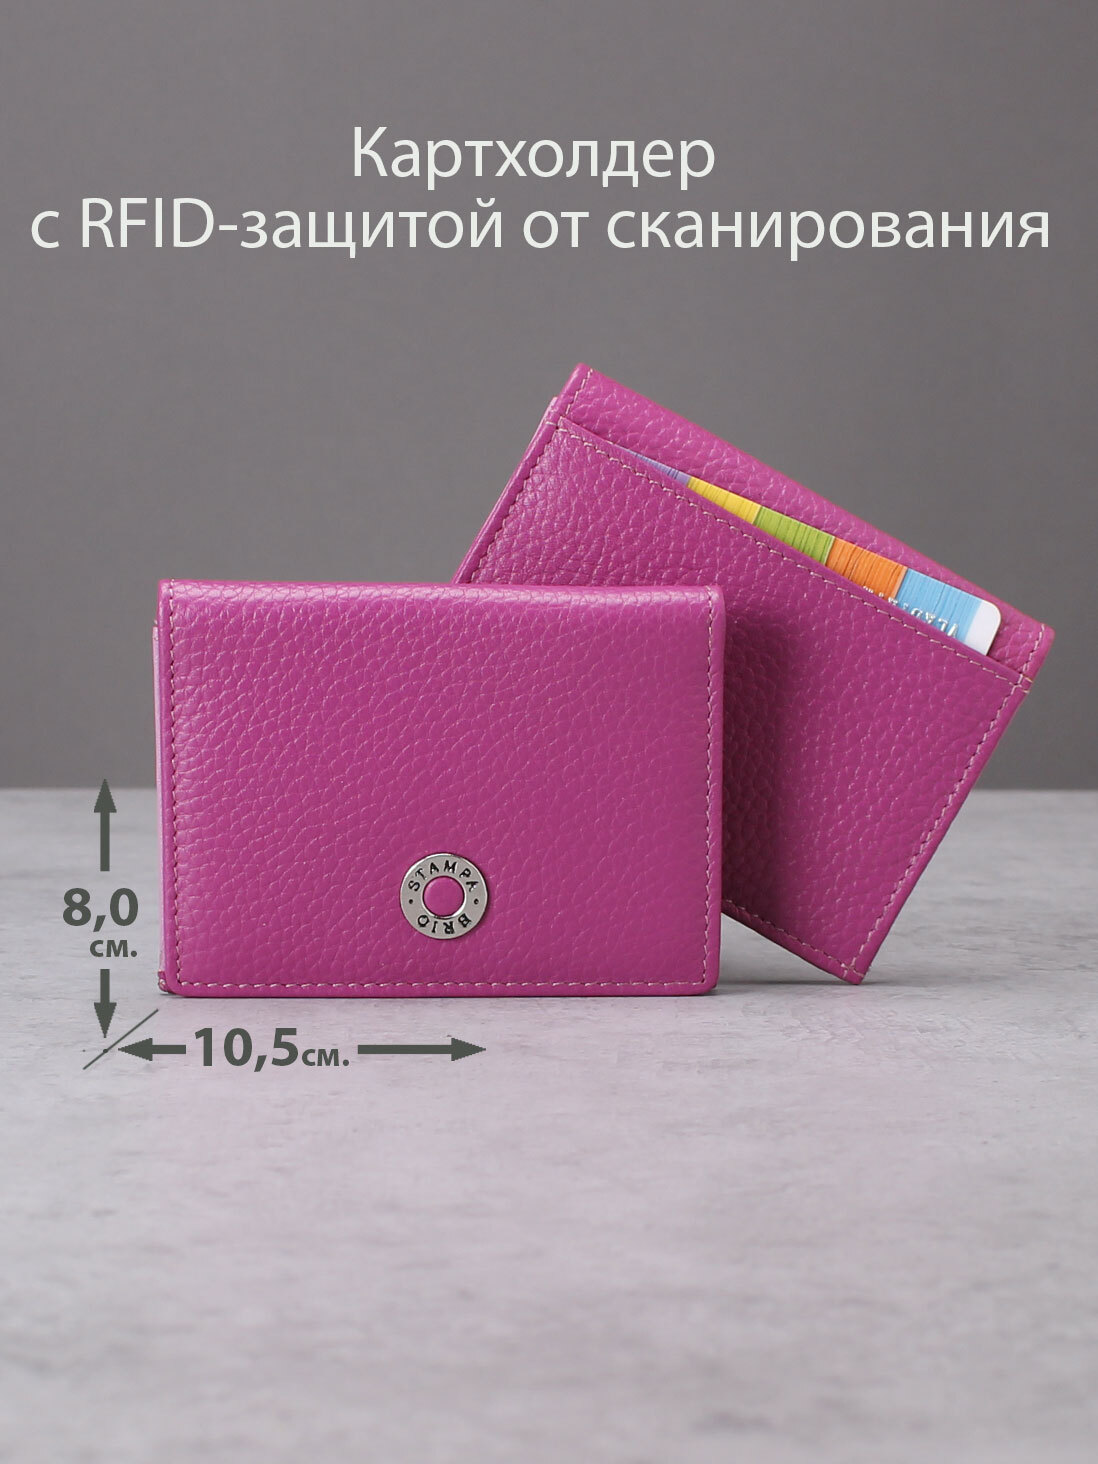 557 R - Футляр для карт и визиток с RFID защитой